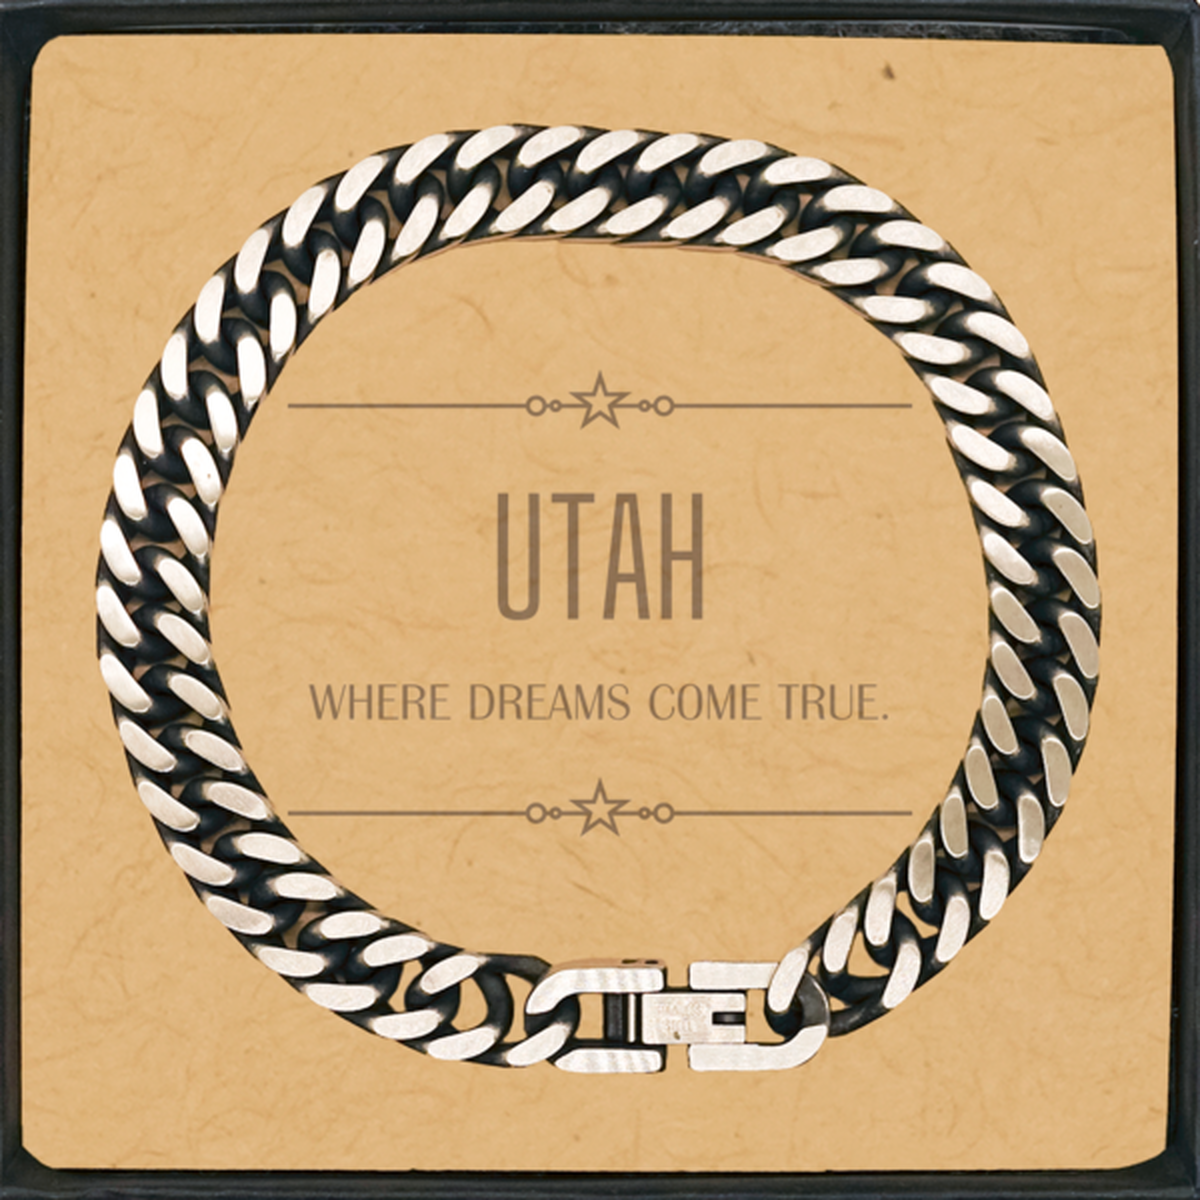 Love Utah State Cuban Link Chain Bracelet, Utah Where dreams come true, Birthday Inspirational Gifts For Utah Men, Women, Friends